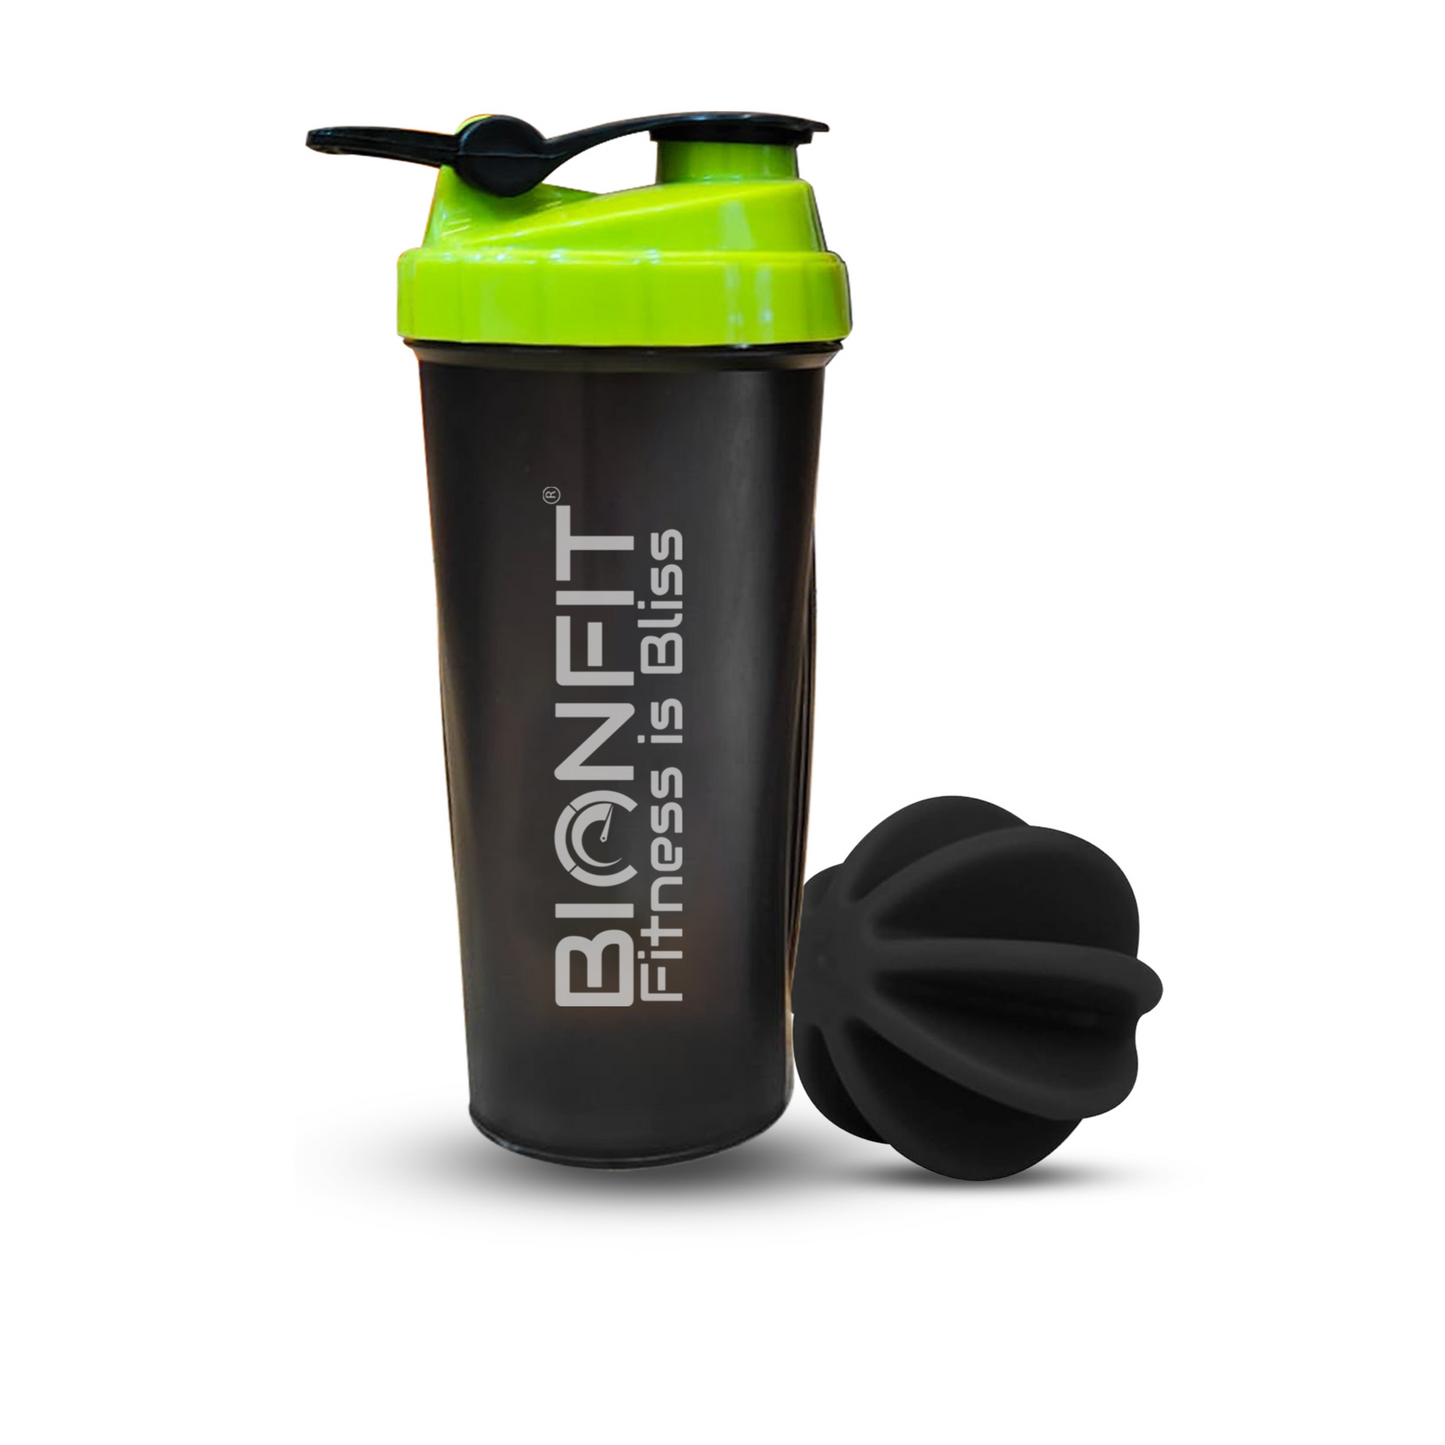 Bionfit Gym Bottle for Protein Shake | 100% Leak-Proof